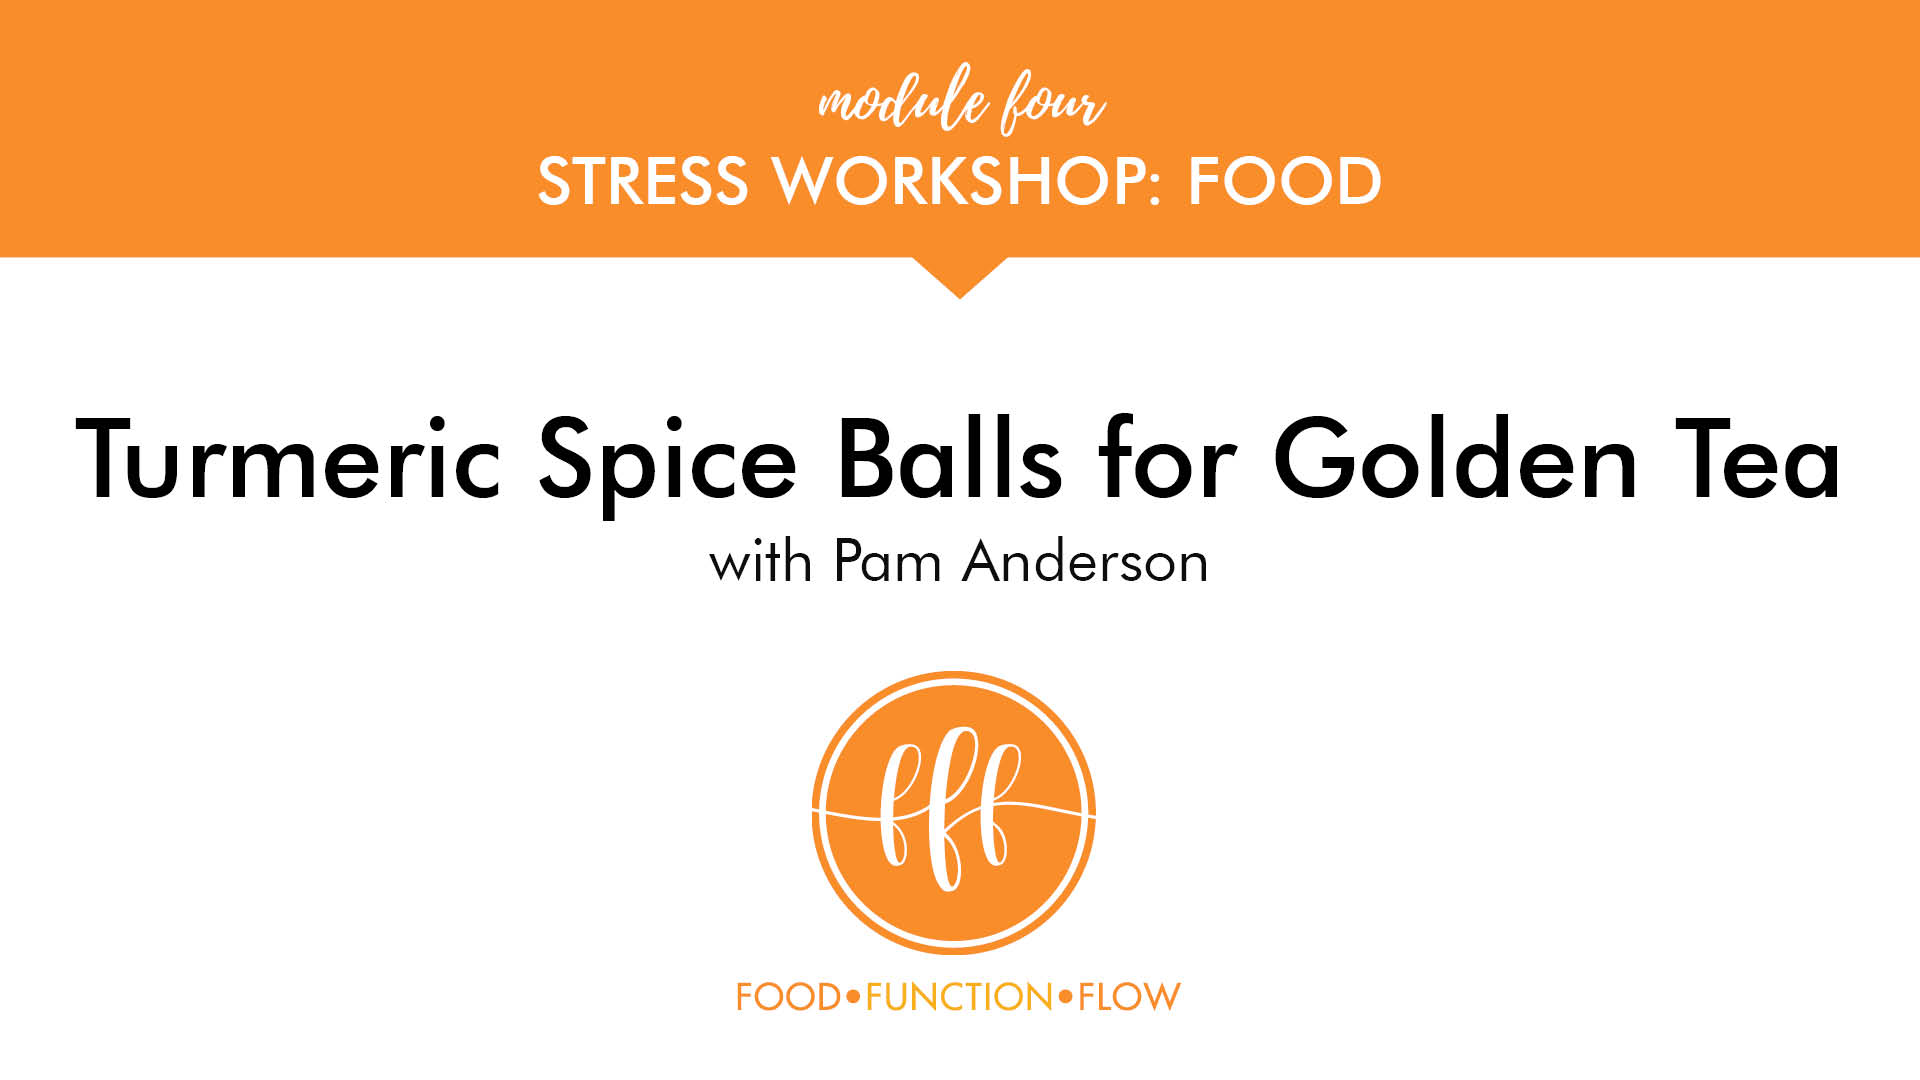 Turmeric Spice Balls for Golden Tea